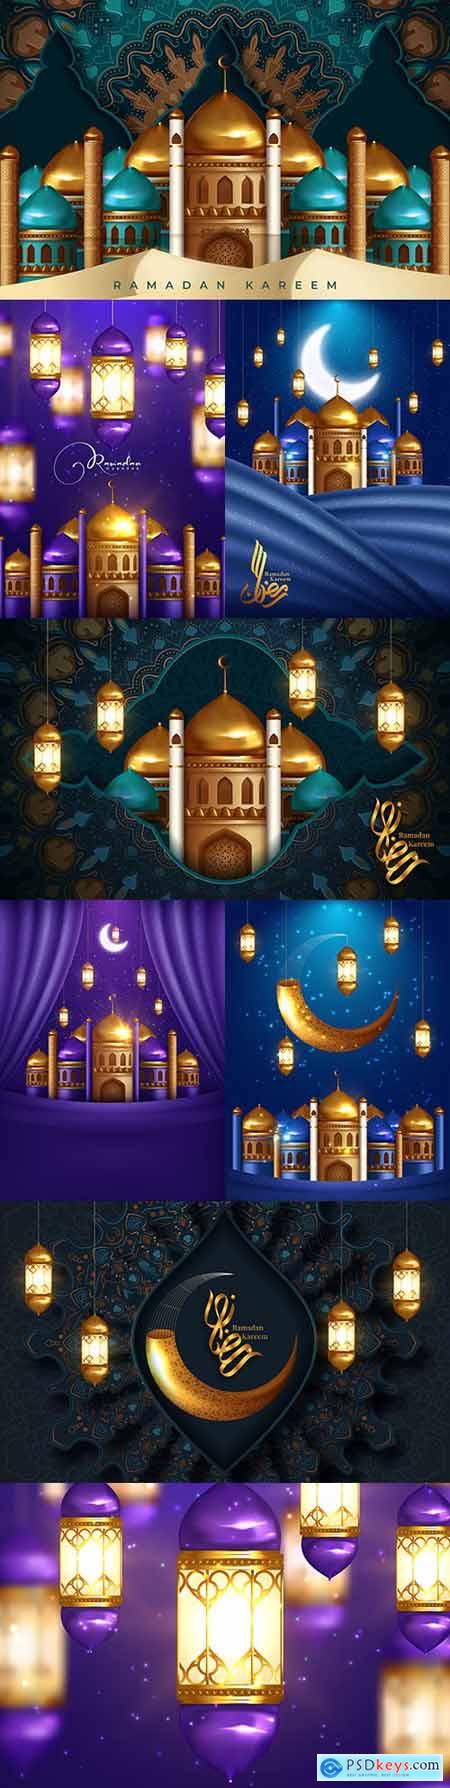 Ramadan Kareem greeting mosque and painted calligraphic illustration